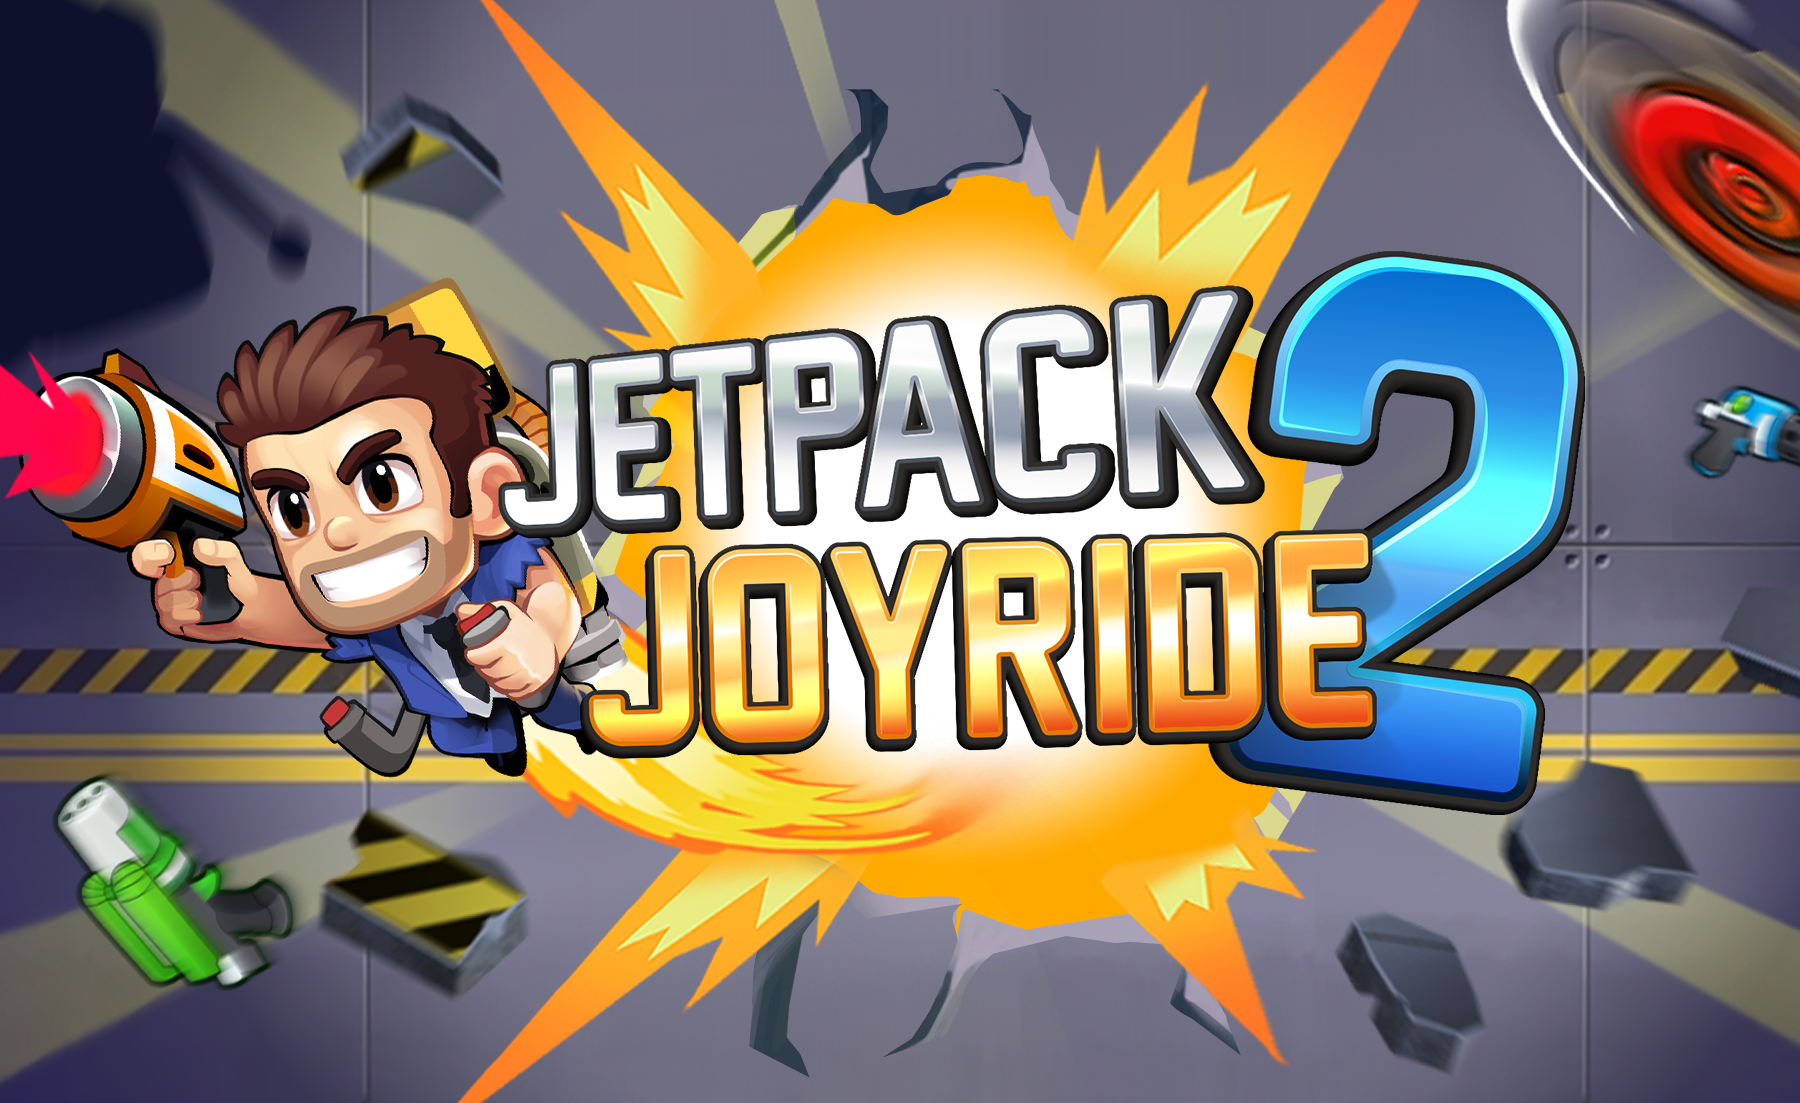 Jetpack Joyride 2 debuts on Apple Arcade